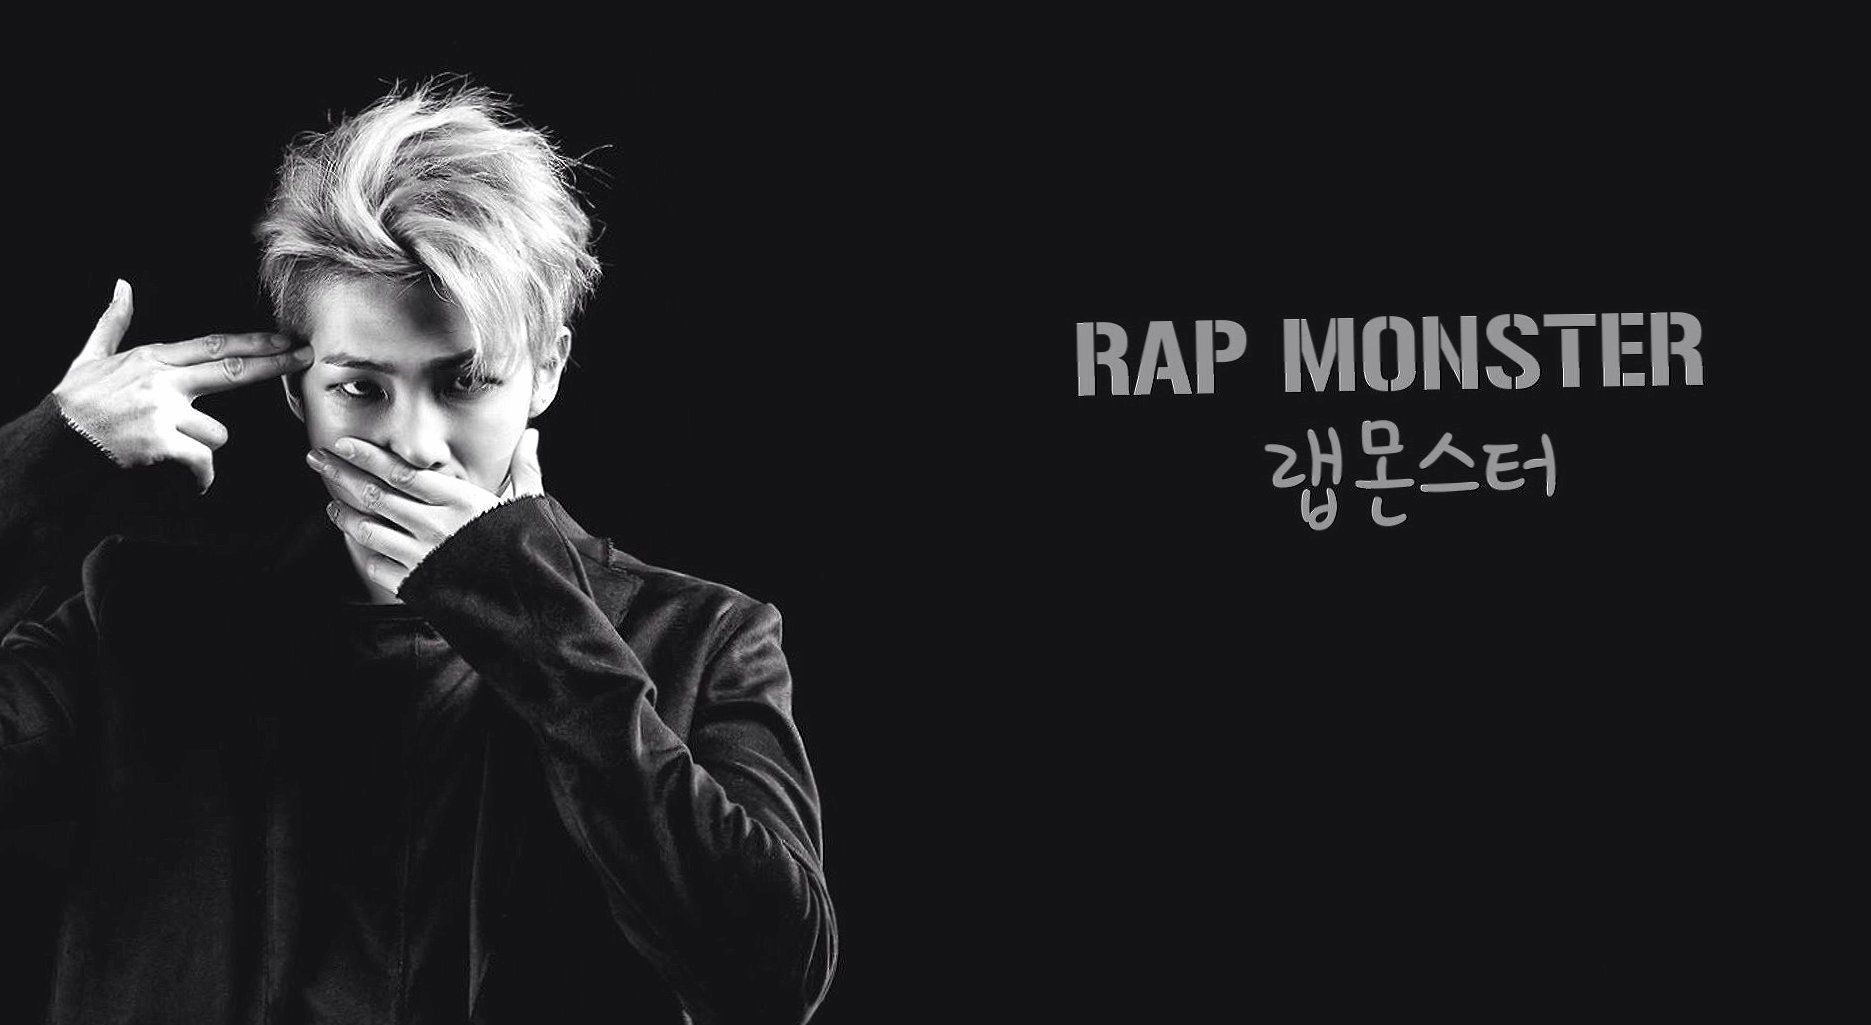 BTS wallpaper HD. Bts laptop wallpaper, Bts rap monster, Music wallpaper